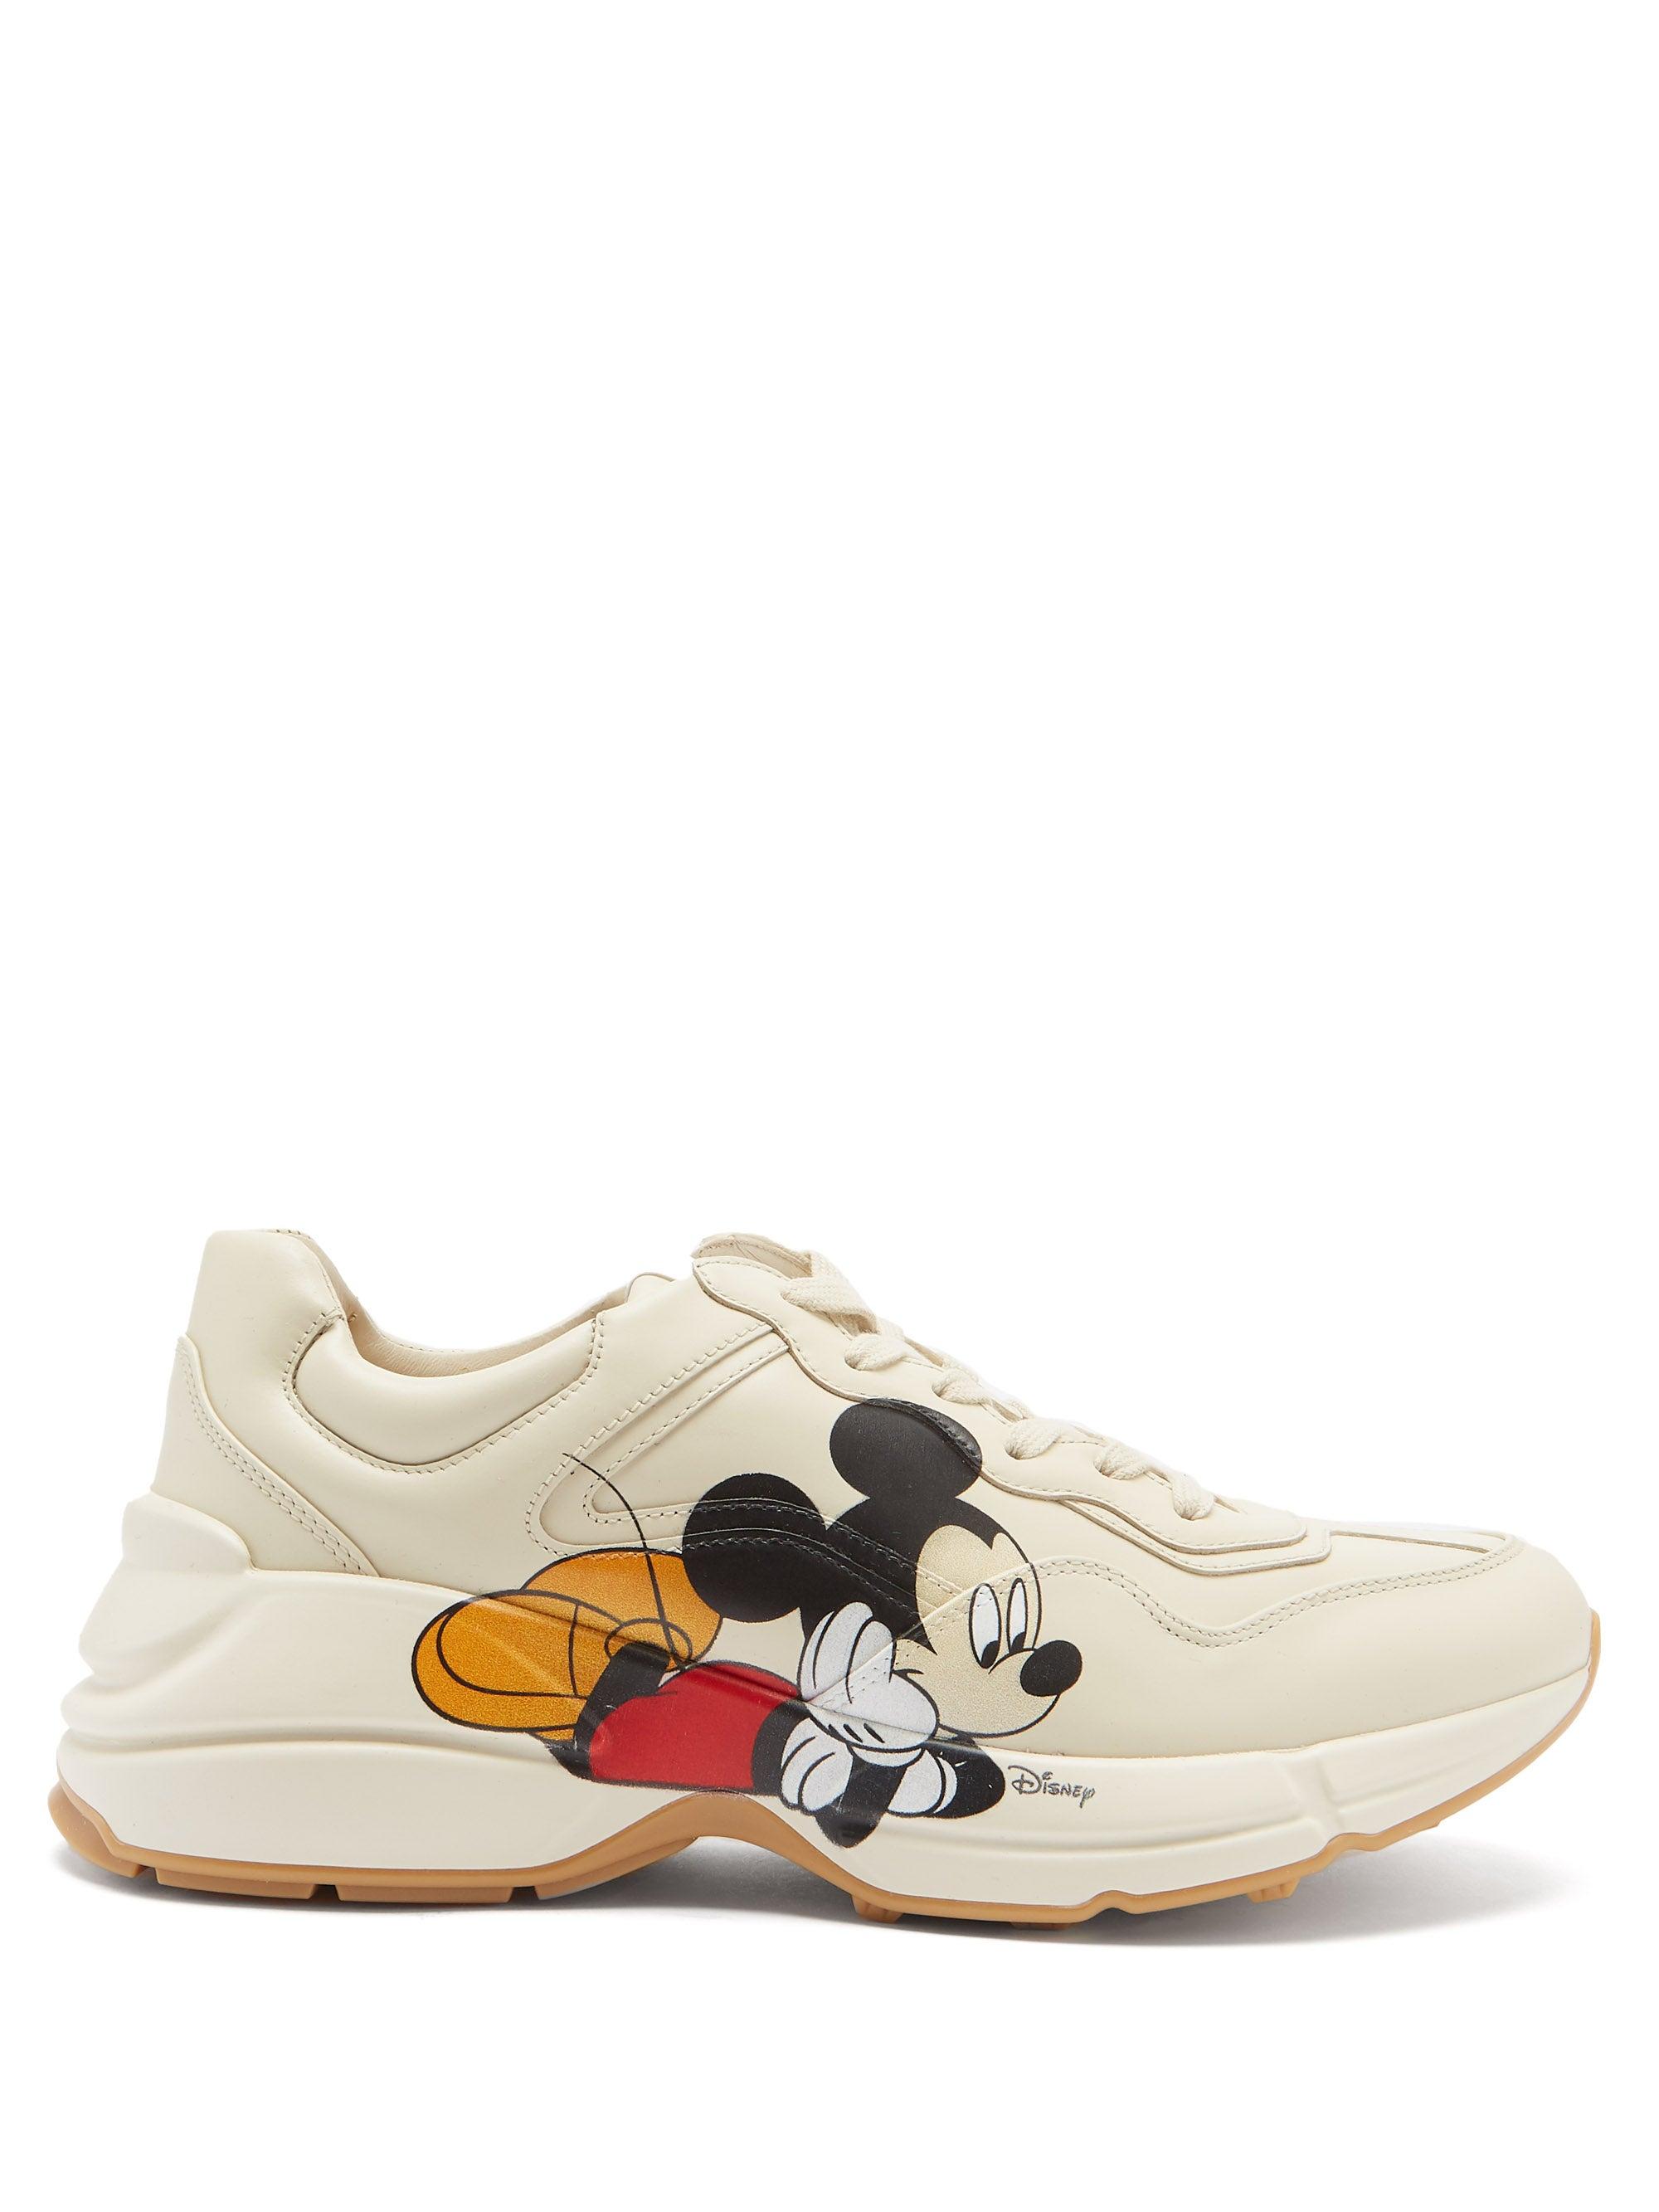 Cheap >giày gucci rhyton mickey mouse big sale - OFF 73%